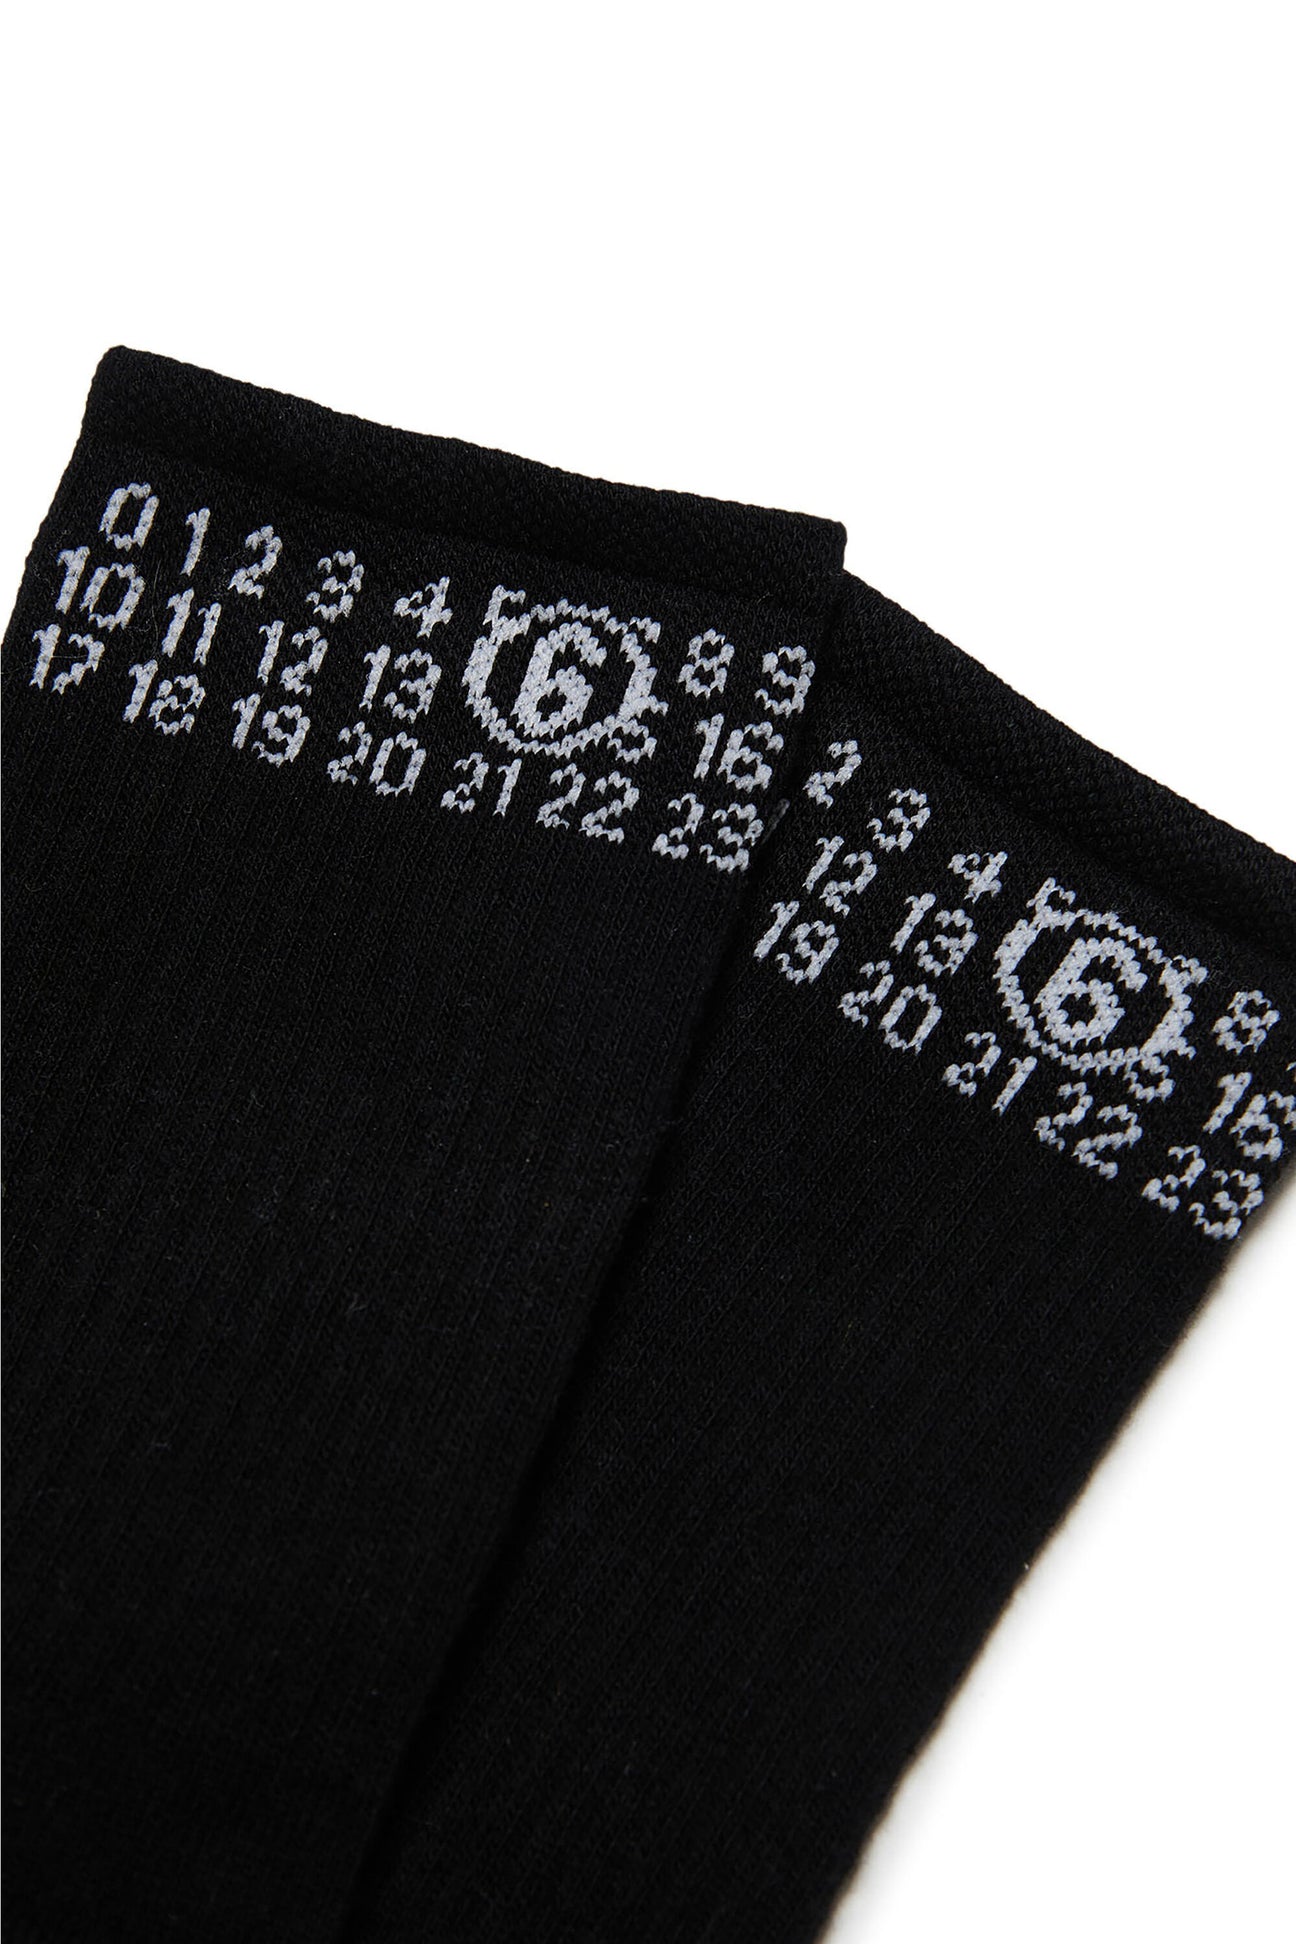 Ribbed socks branded with numeric logo Ribbed socks branded with numeric logo